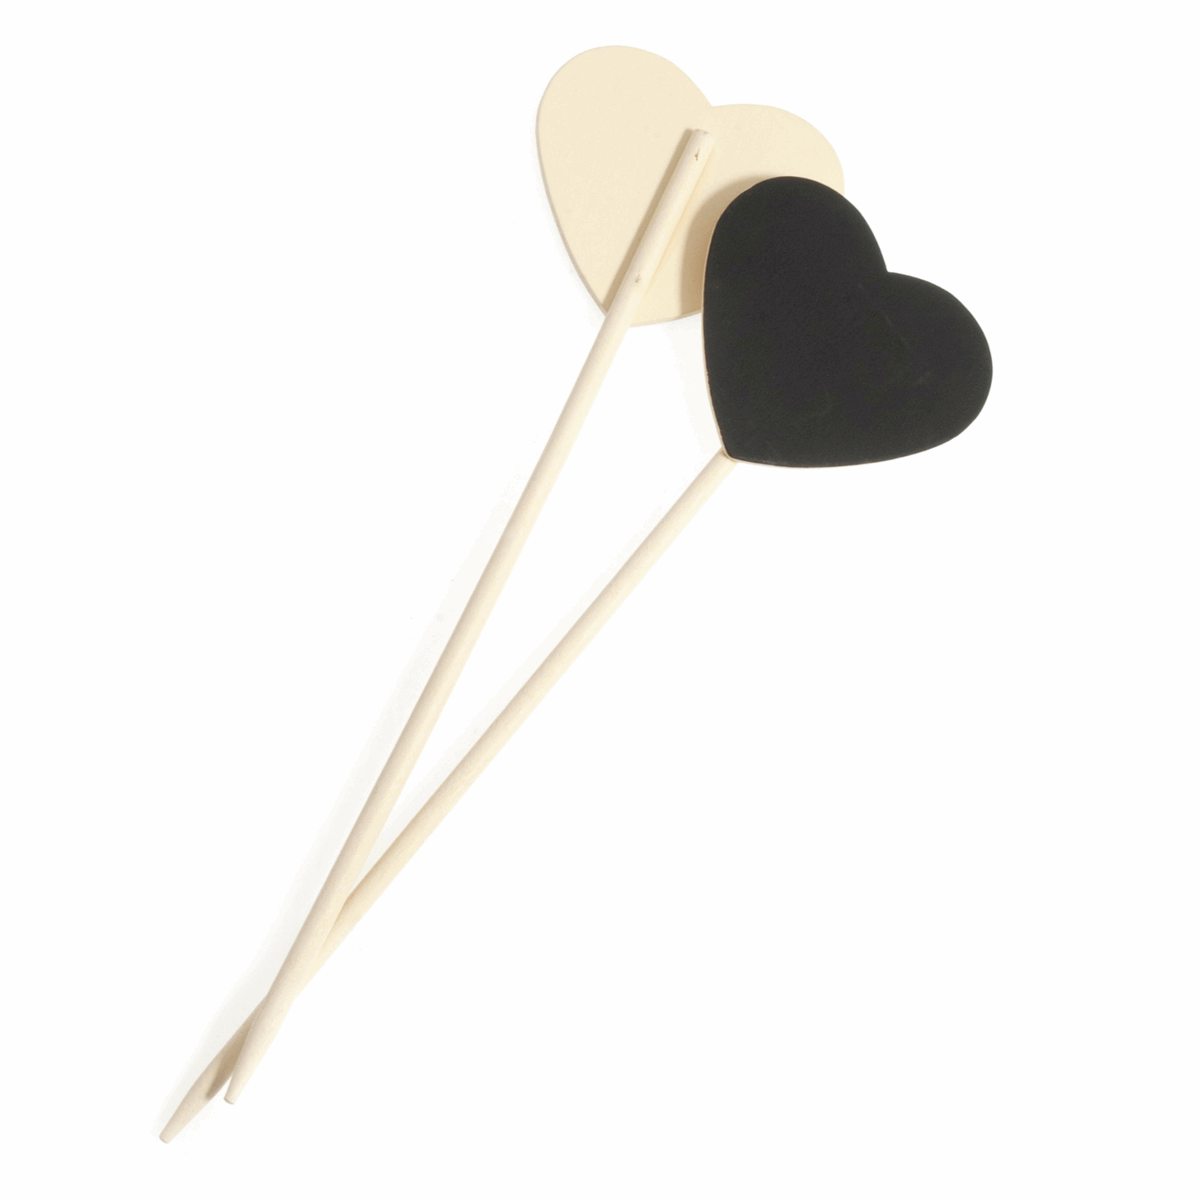 Ivory Heart Shape Chalkboards on a Stick - 23 x 7cm (Pack of 2)